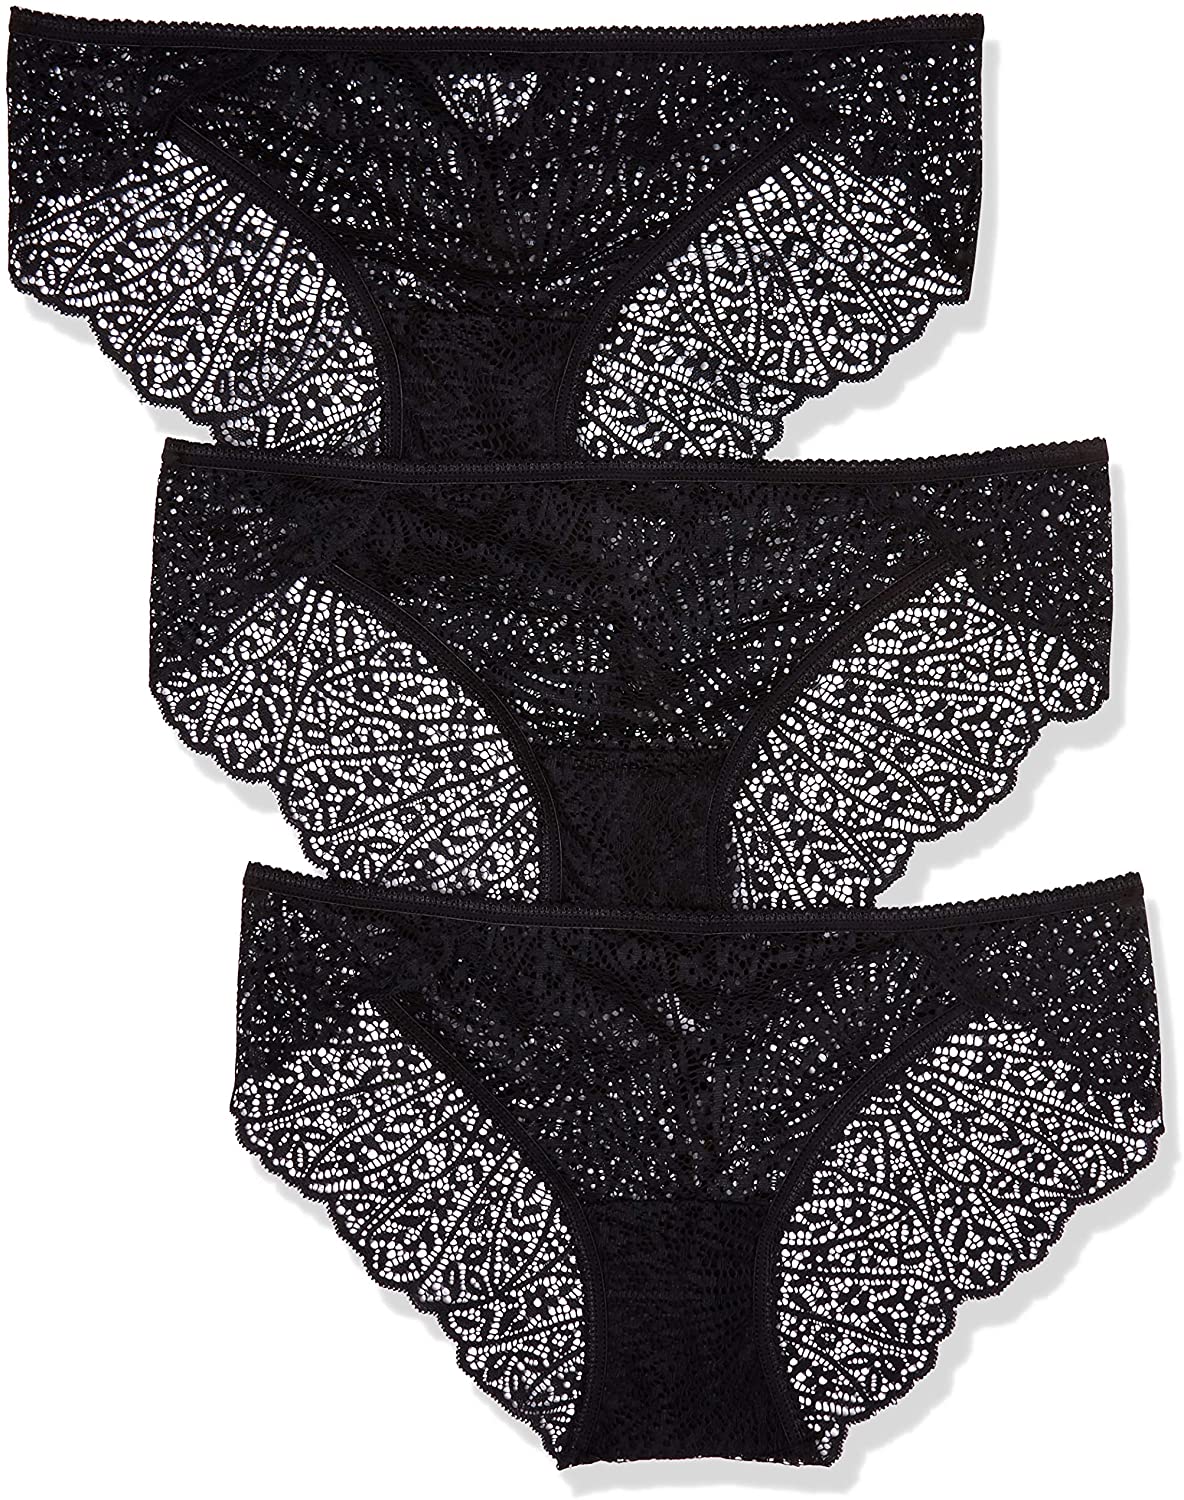 3-Pack Brand Iris /& Lilly Women/'s Cotton Bikini Panty